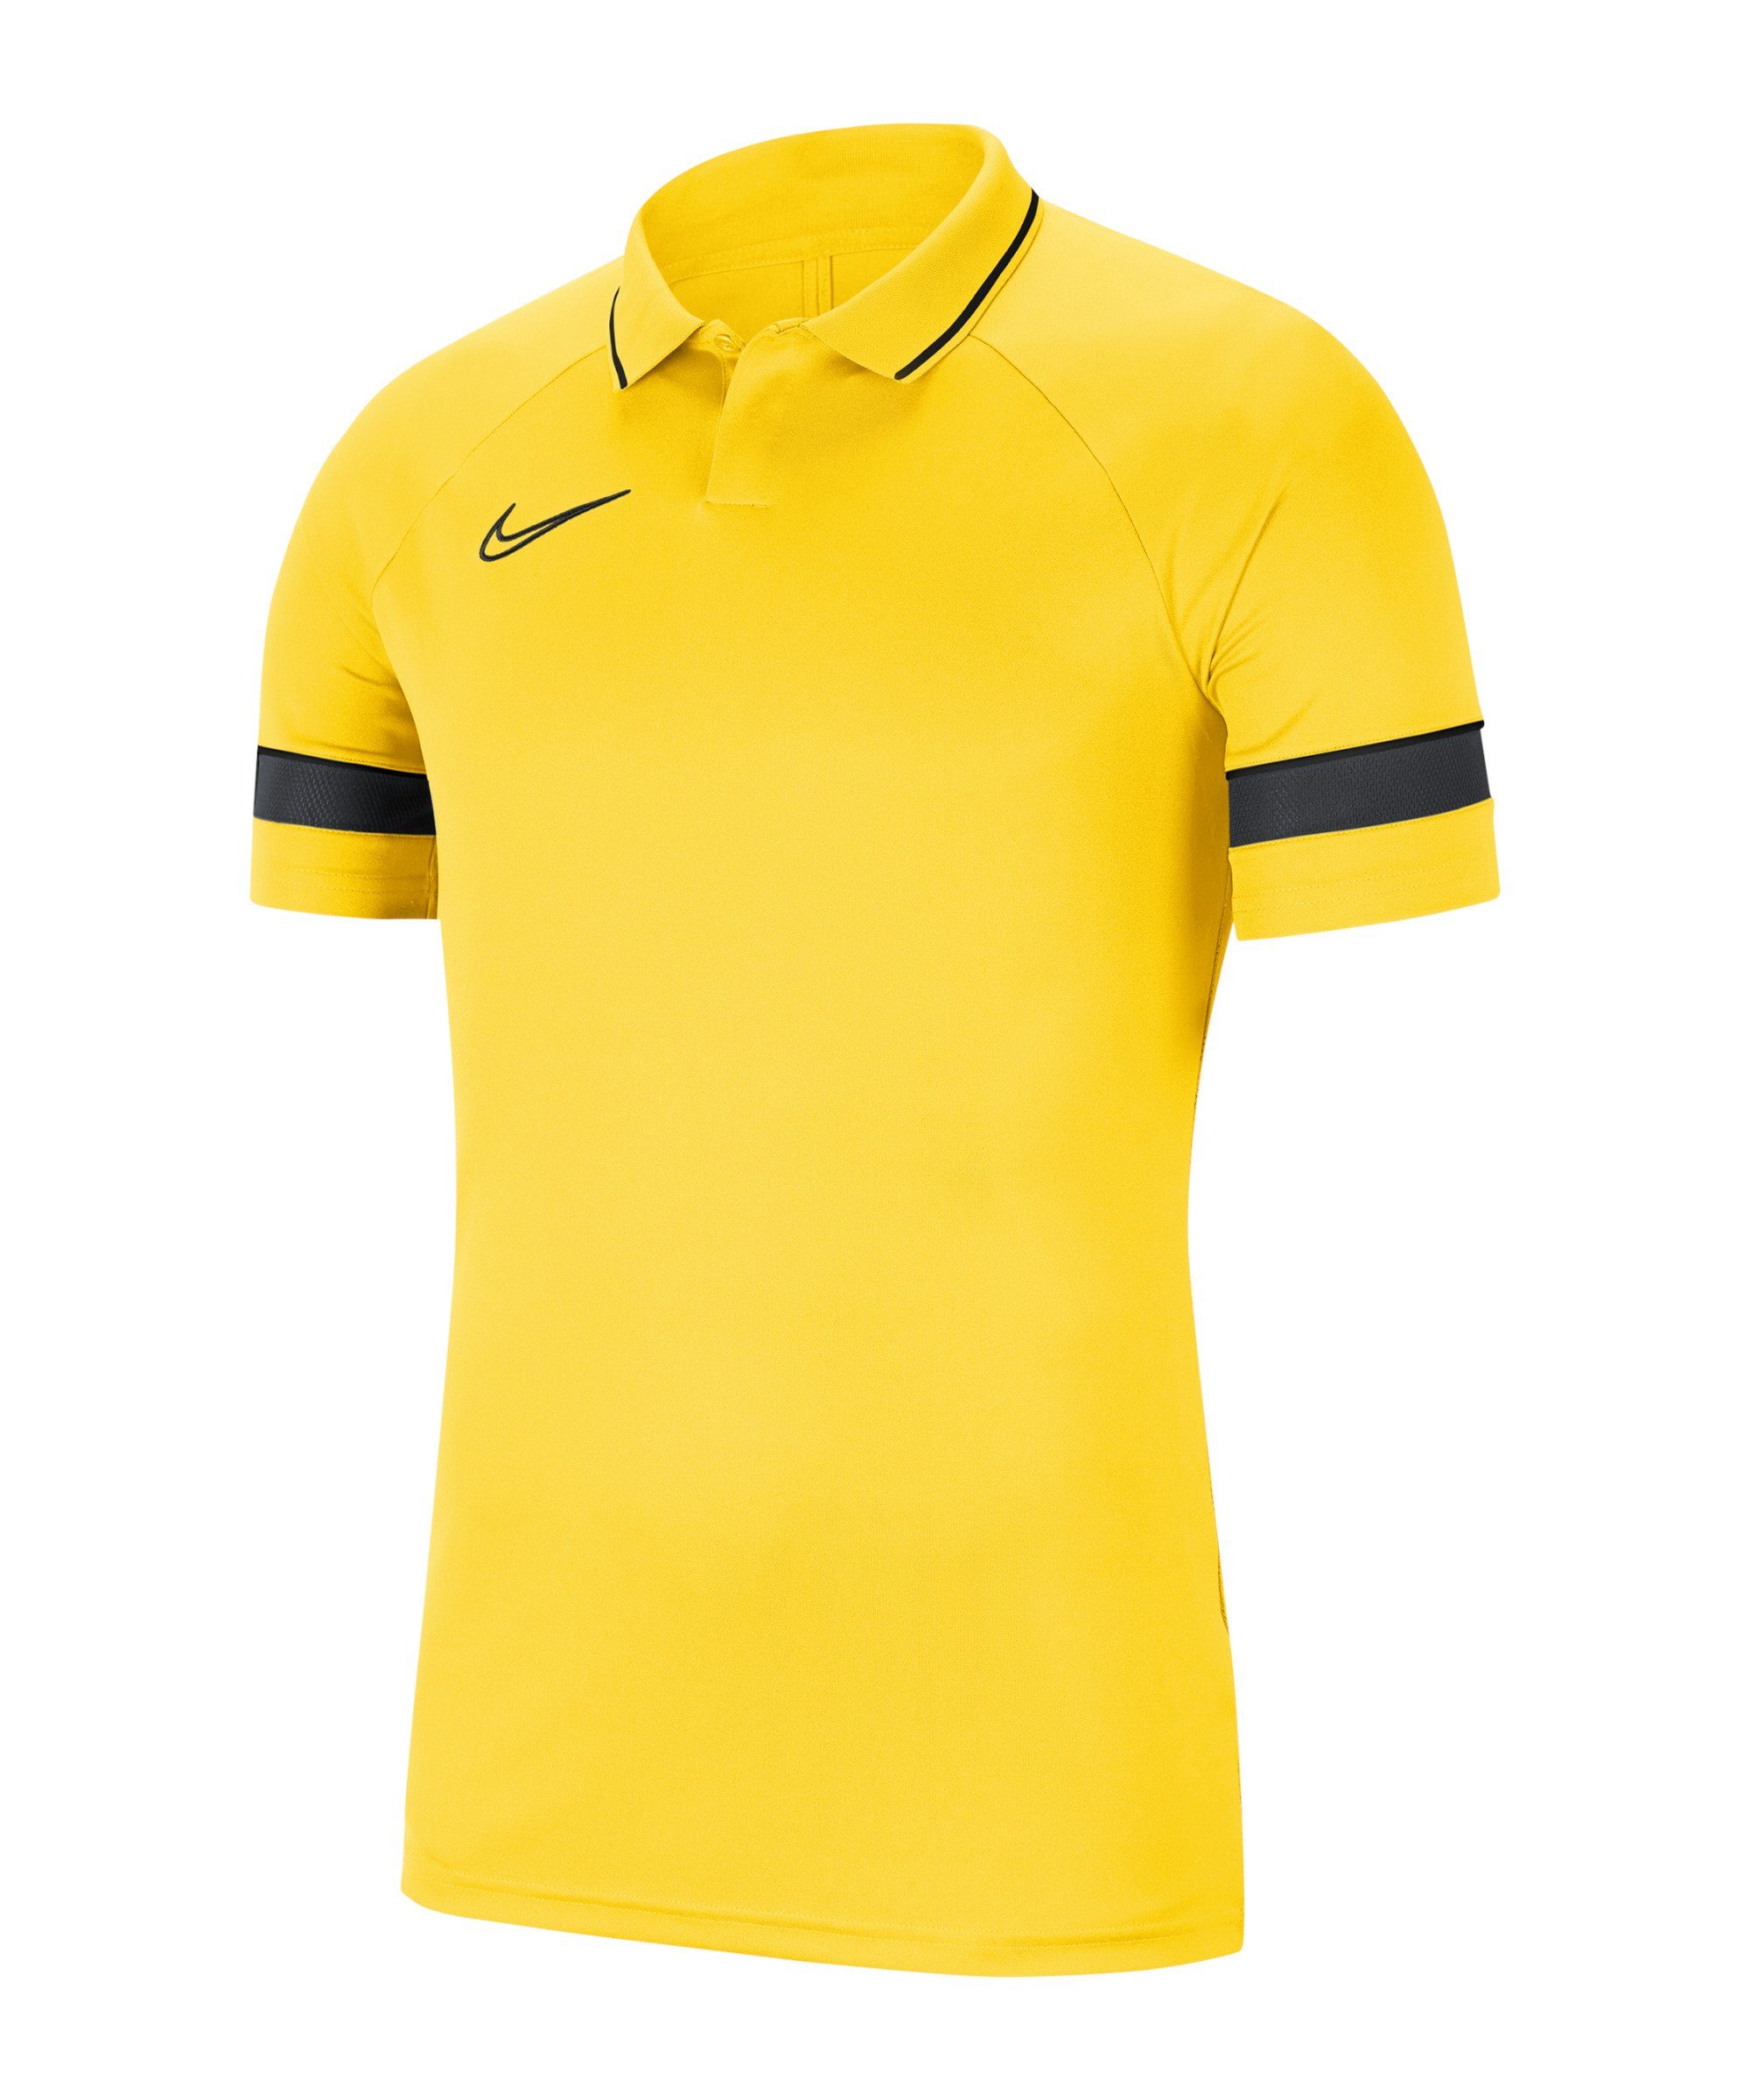 Academy Poloshirt default T-Shirt 21 Nike gelbschwarzgrau